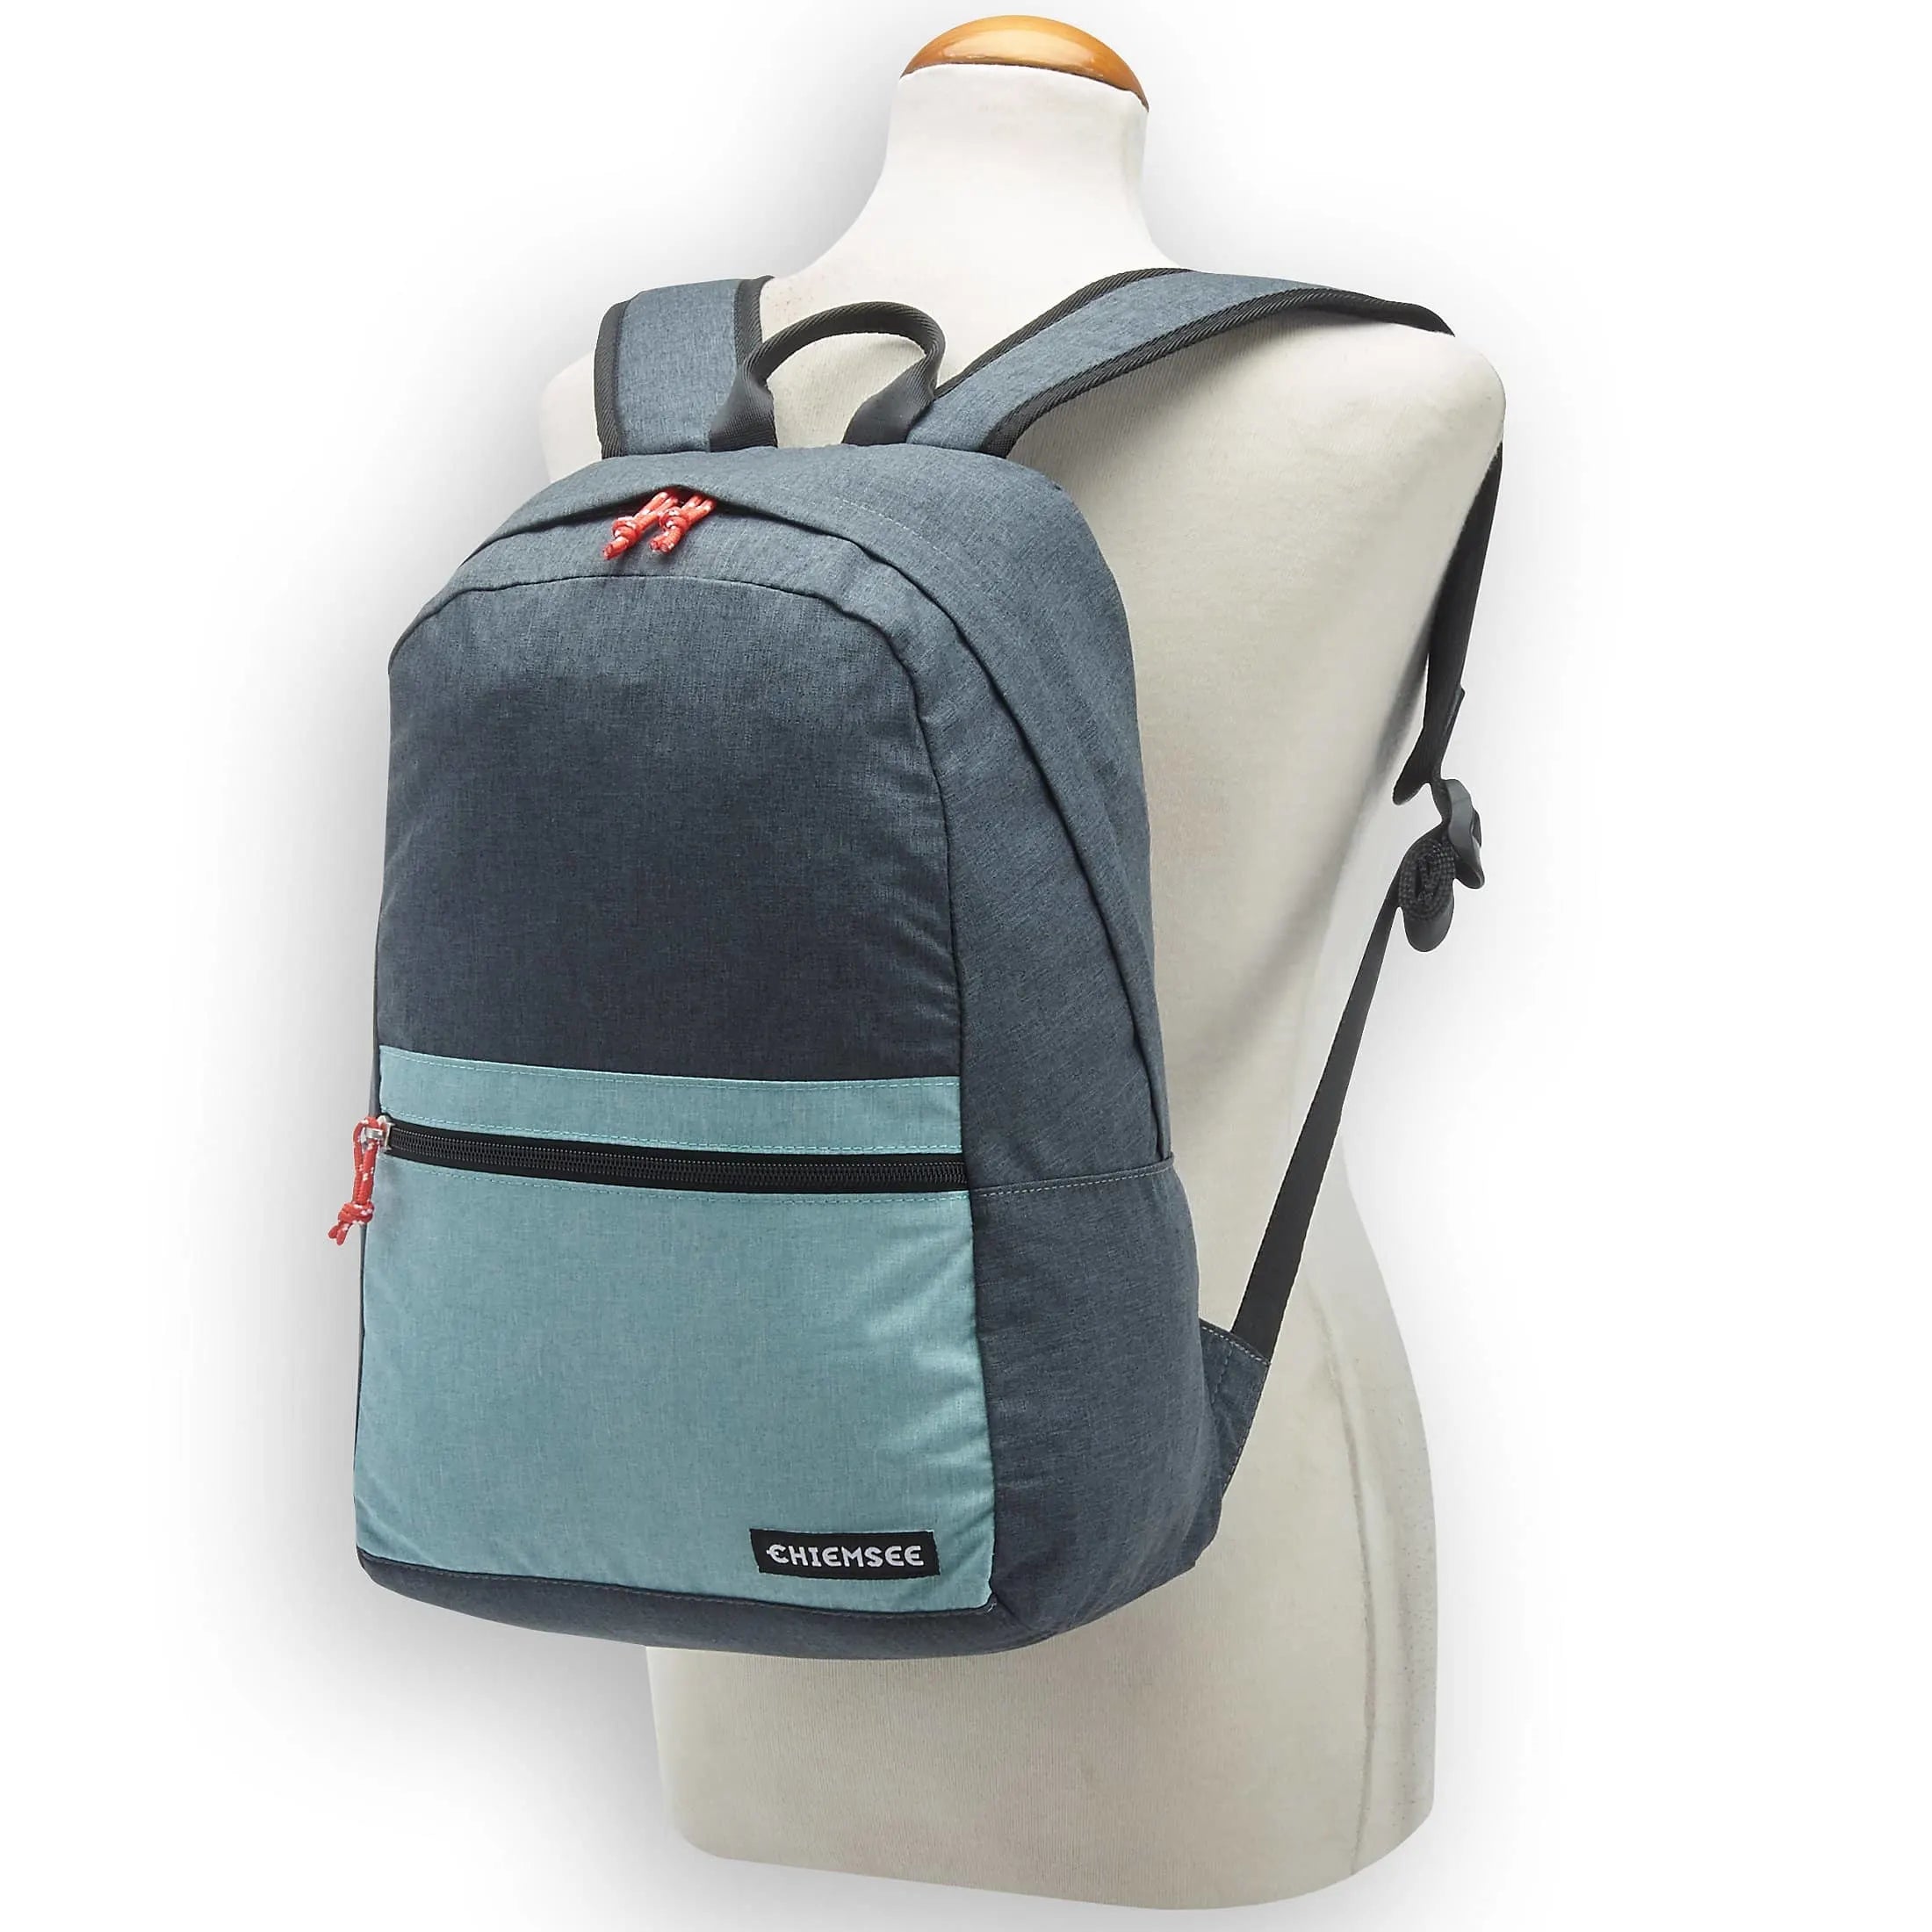 Chiemsee Sports & Travel Bags Easy Rucksack 42 cm - coronet blue